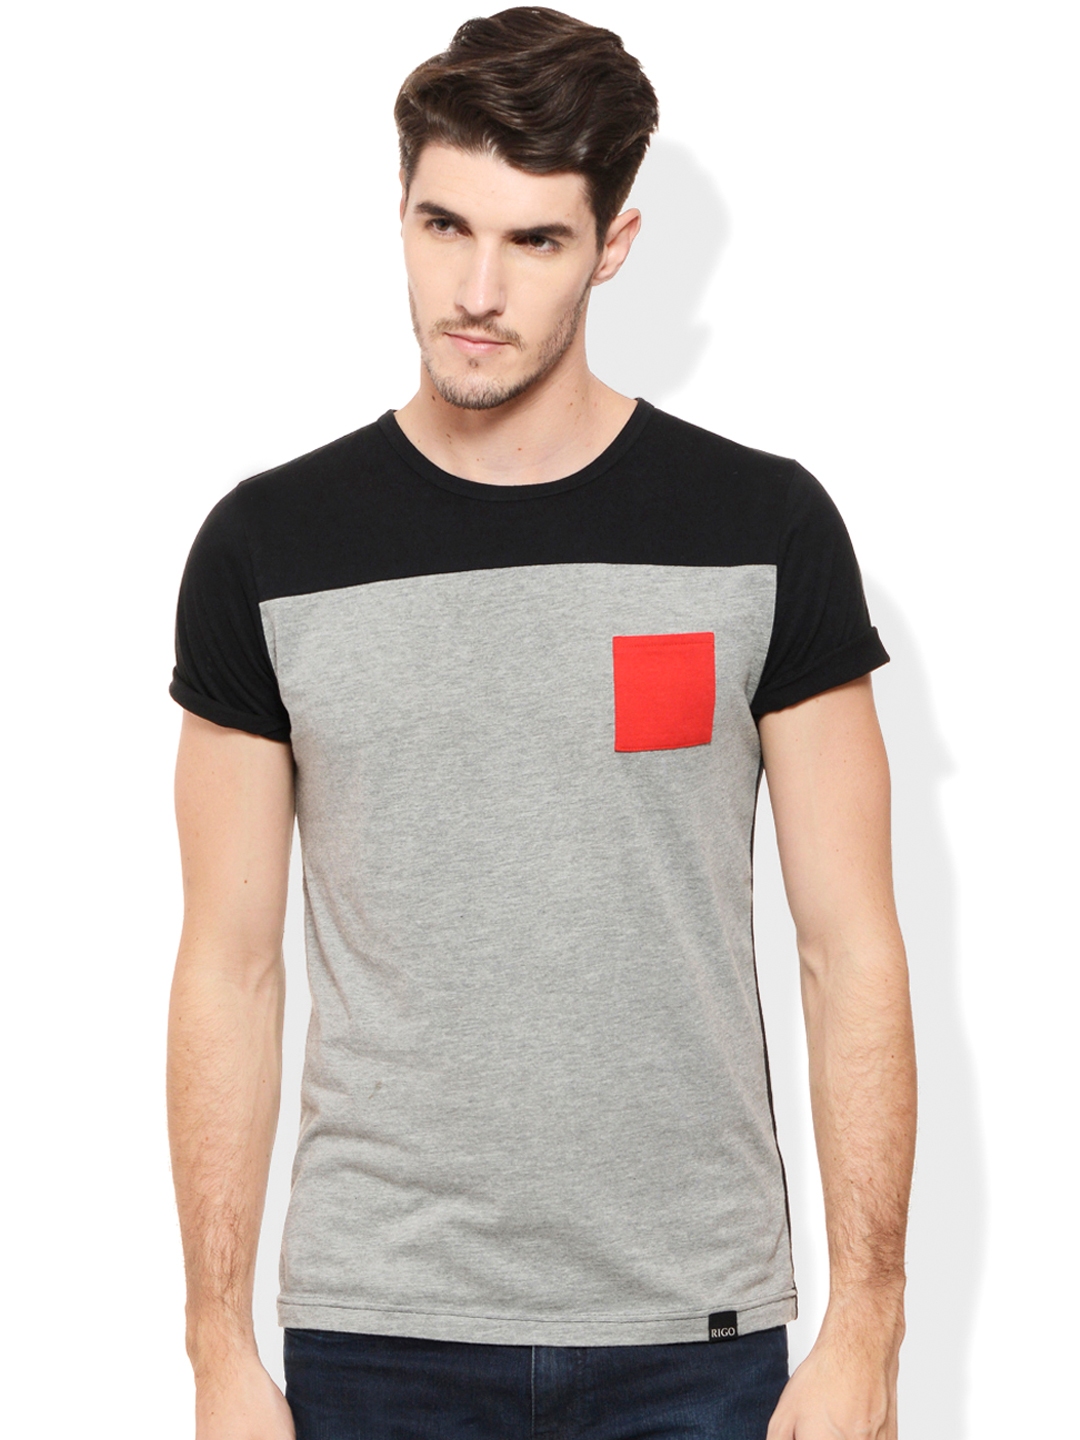 Buy Rigo Grey Melange & Black Colourblocked Smart Fit T Shirt